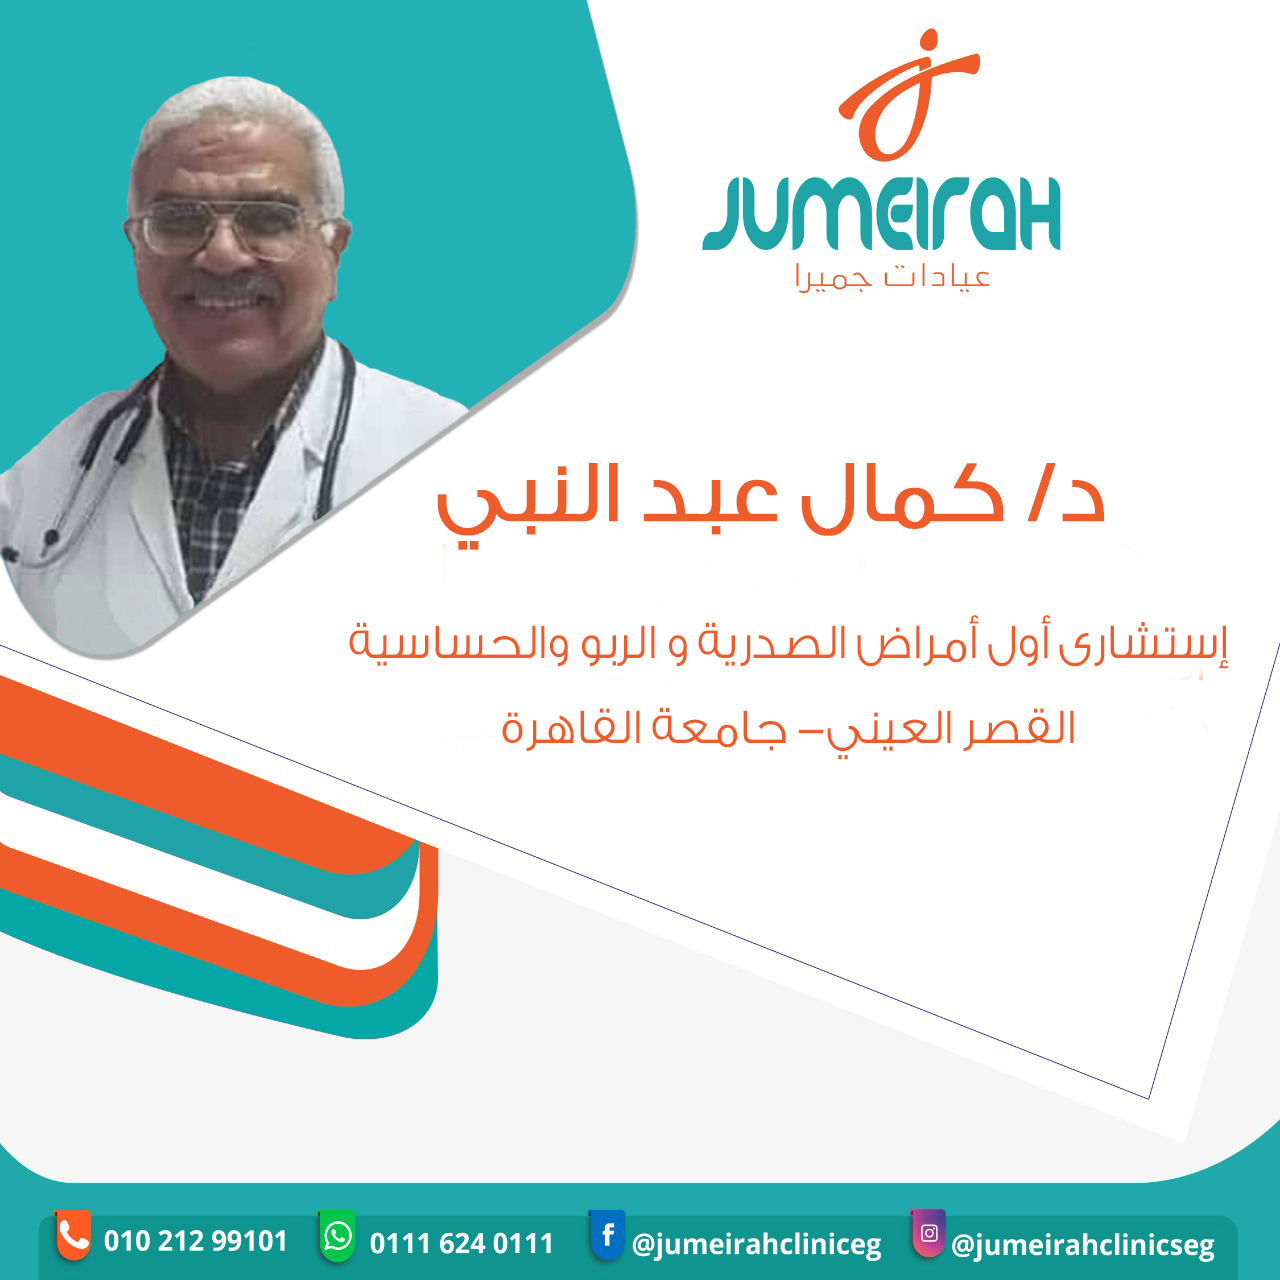 Dr. Kamal Abdelnabi